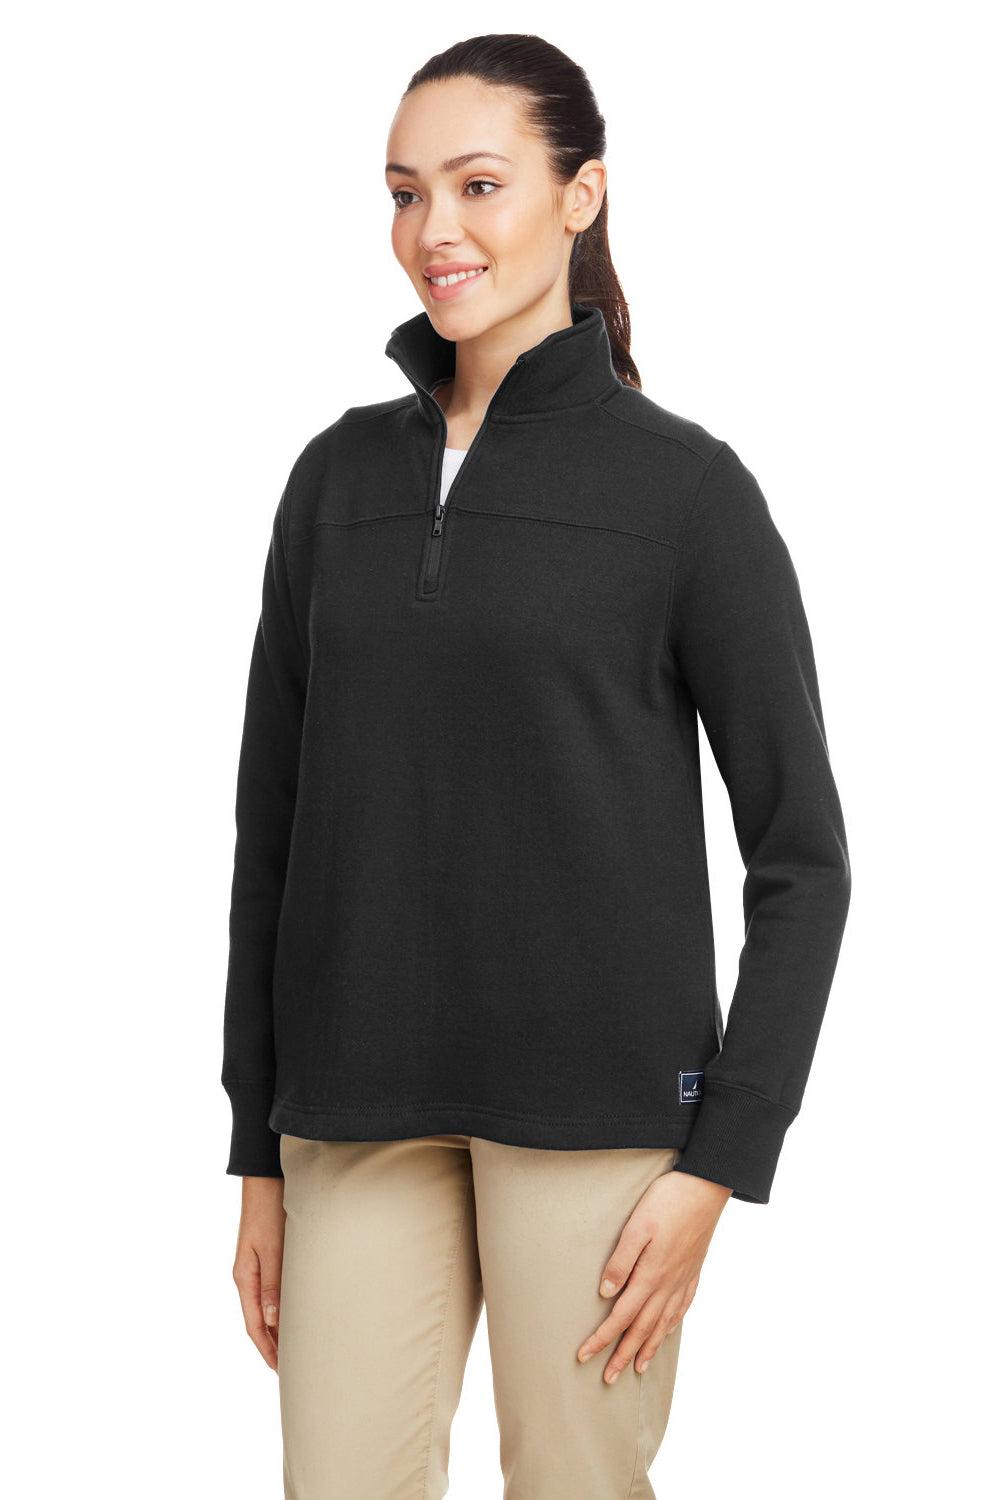 Nautica N17397 Womens Anchor Fleece 1/4 Zip Sweatshirt Black 3Q